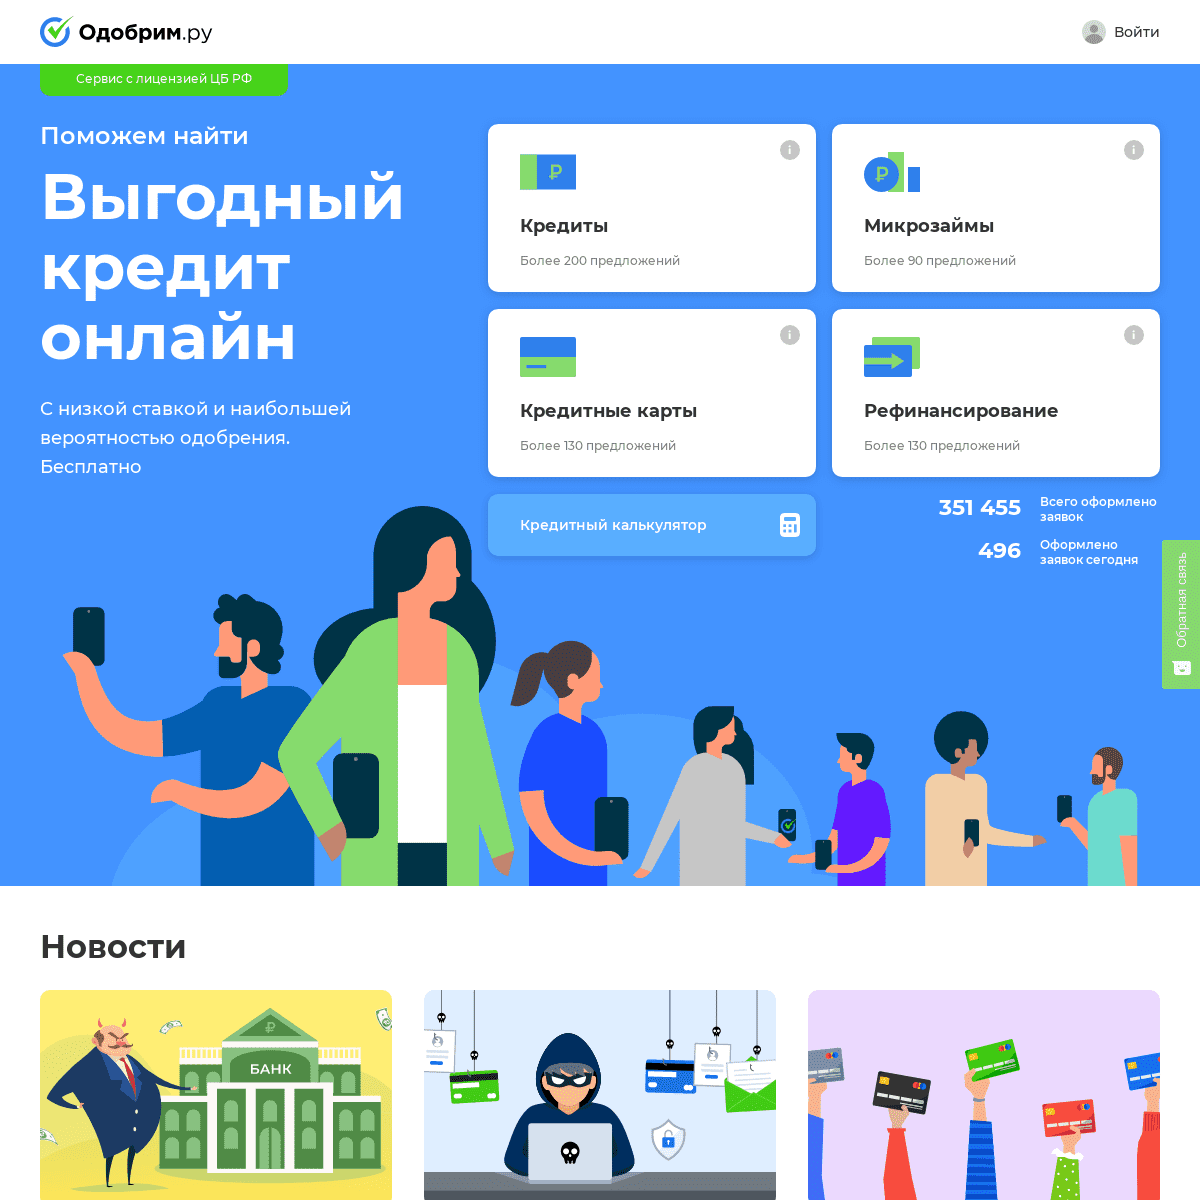 A complete backup of odobrim.ru